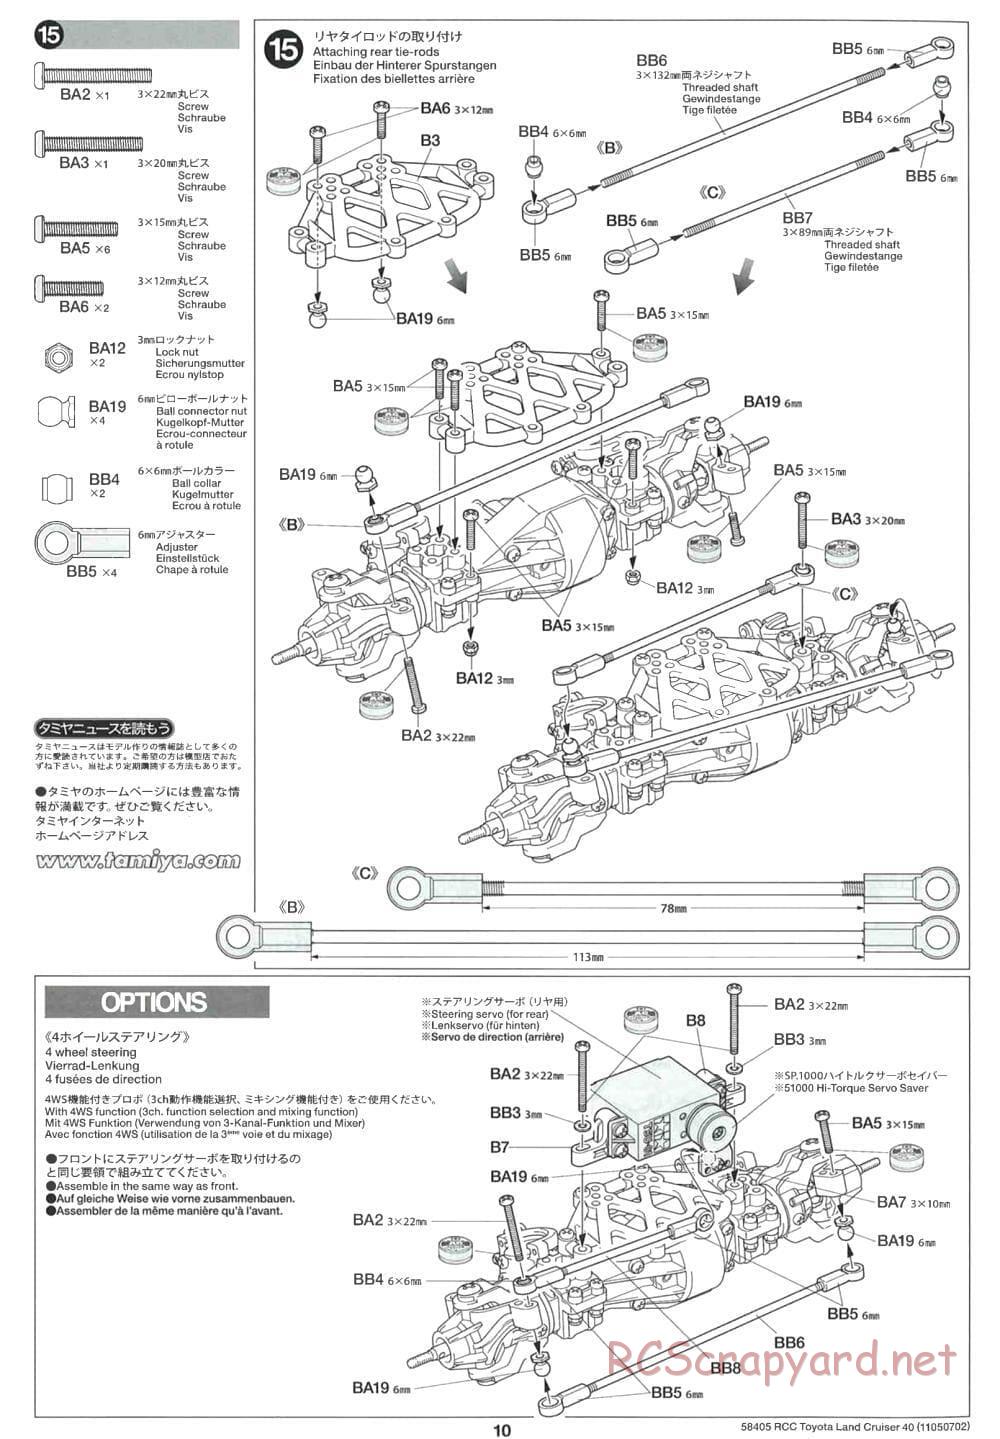 Tamiya - Toyota Land Cruiser 40 - CR-01 Chassis - Manual - Page 10